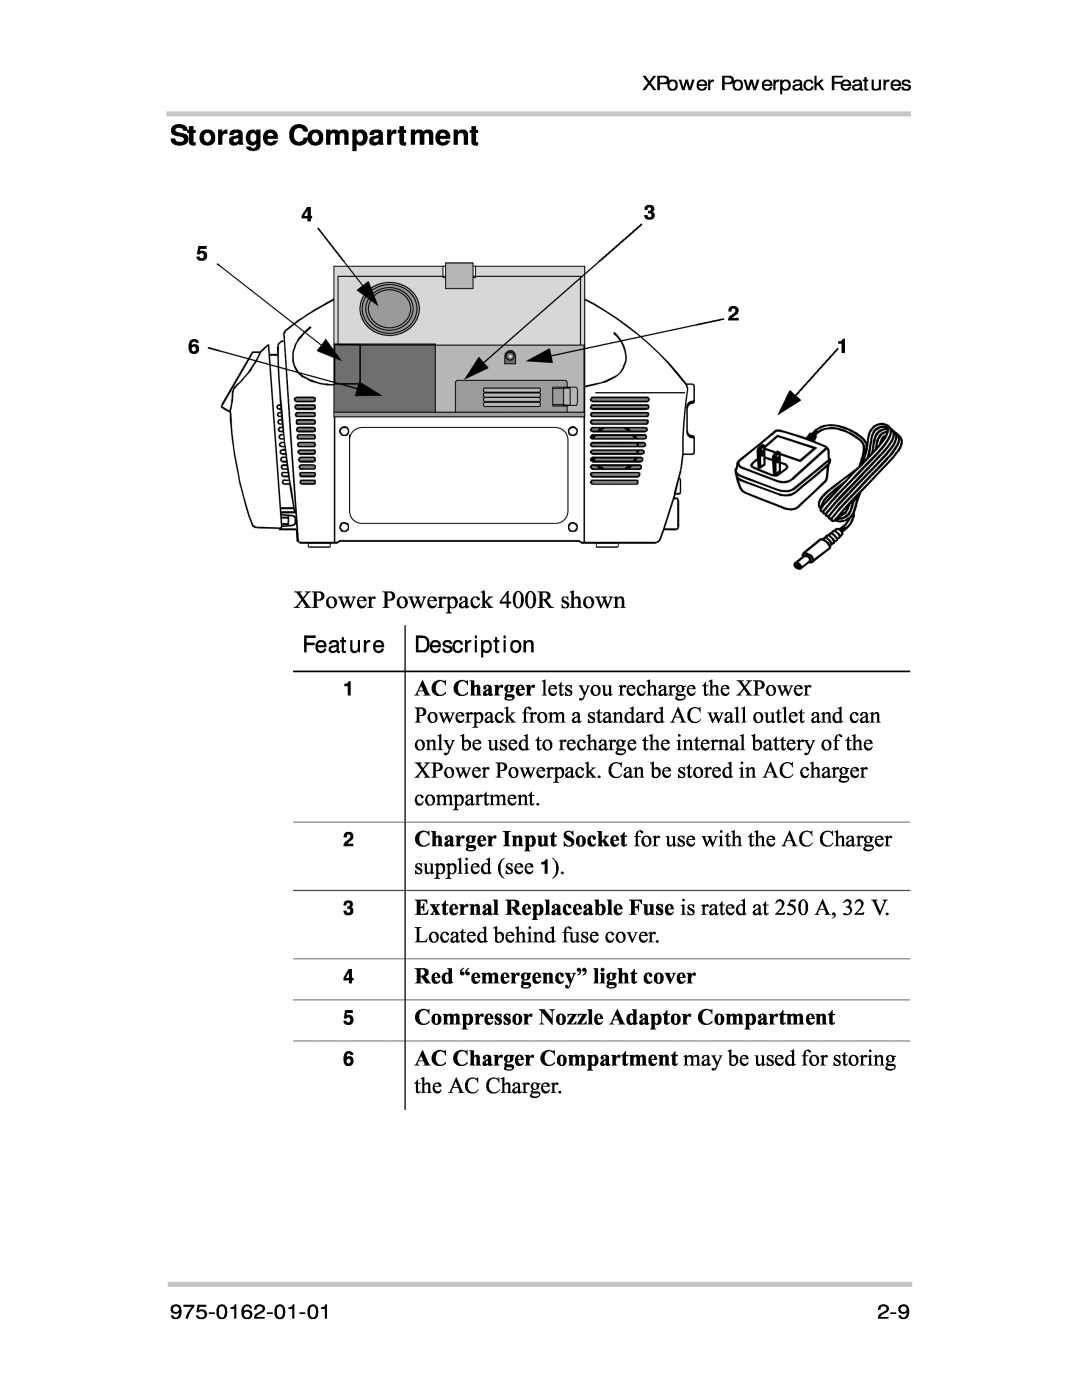 Xantrex Technology manual Storage Compartment, XPower Powerpack 400R shown, Feature Description 